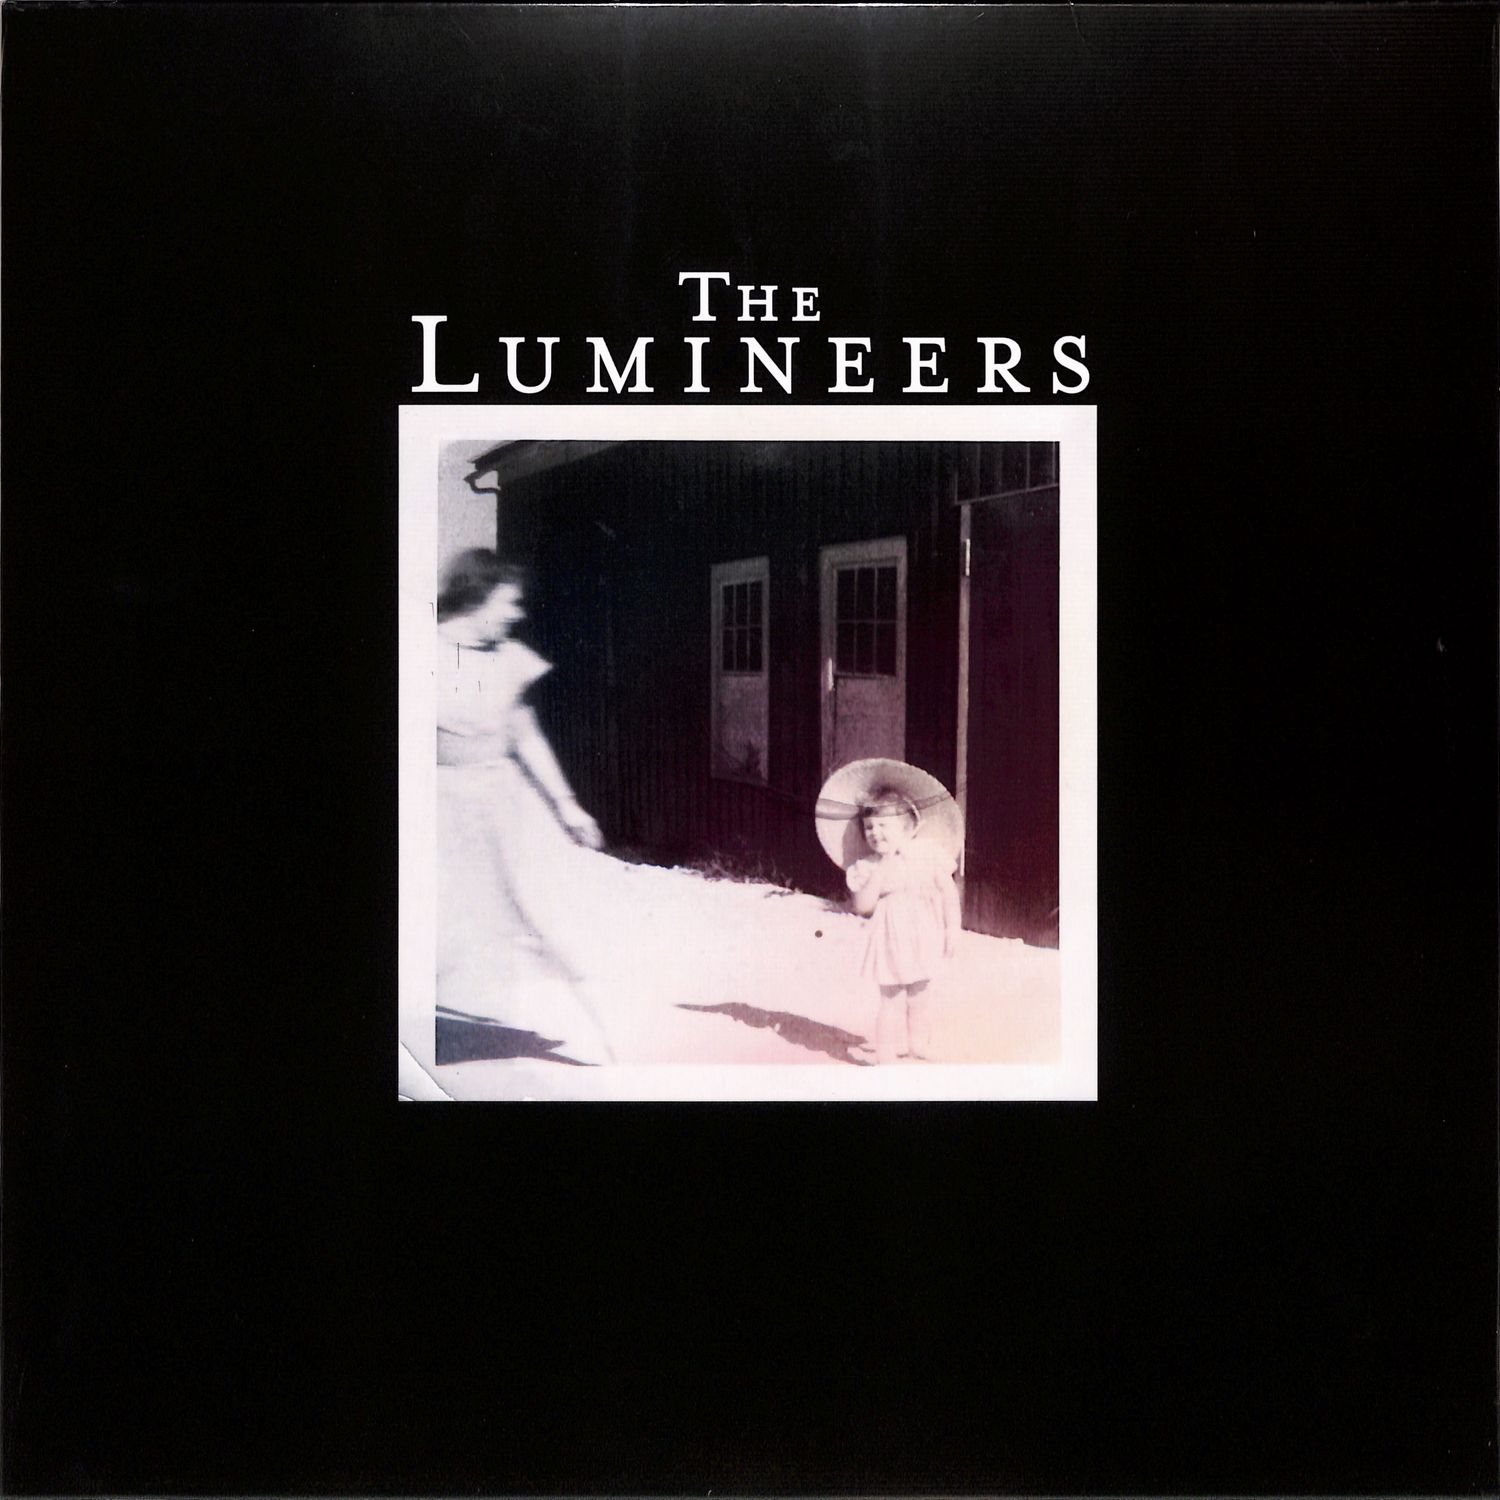 The Lumineers - THE LUMINEERS 